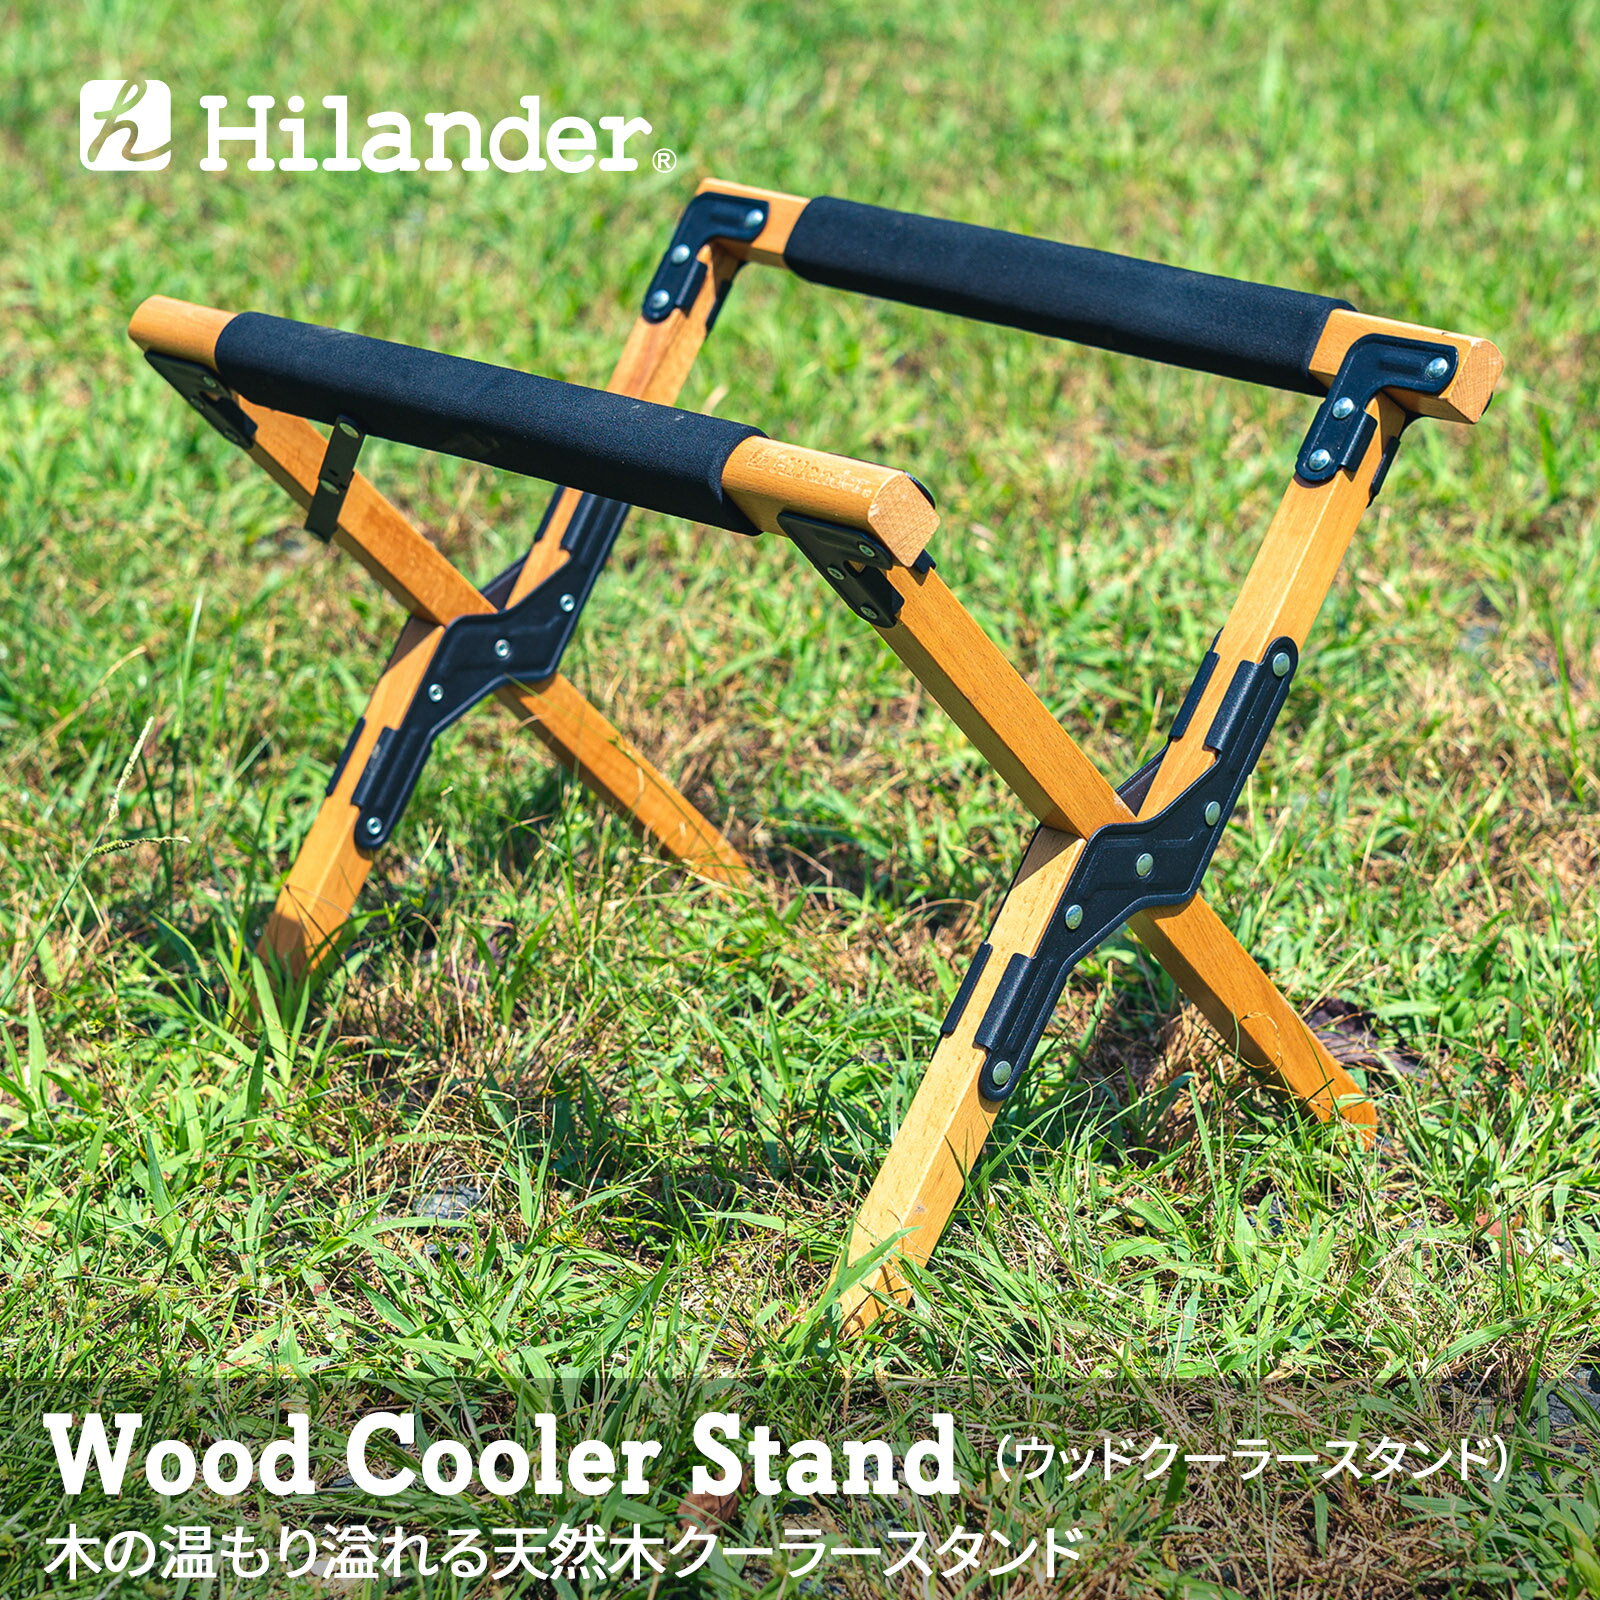 Hilander(ハイランダー) ウッドクーラースタンド HCA0179